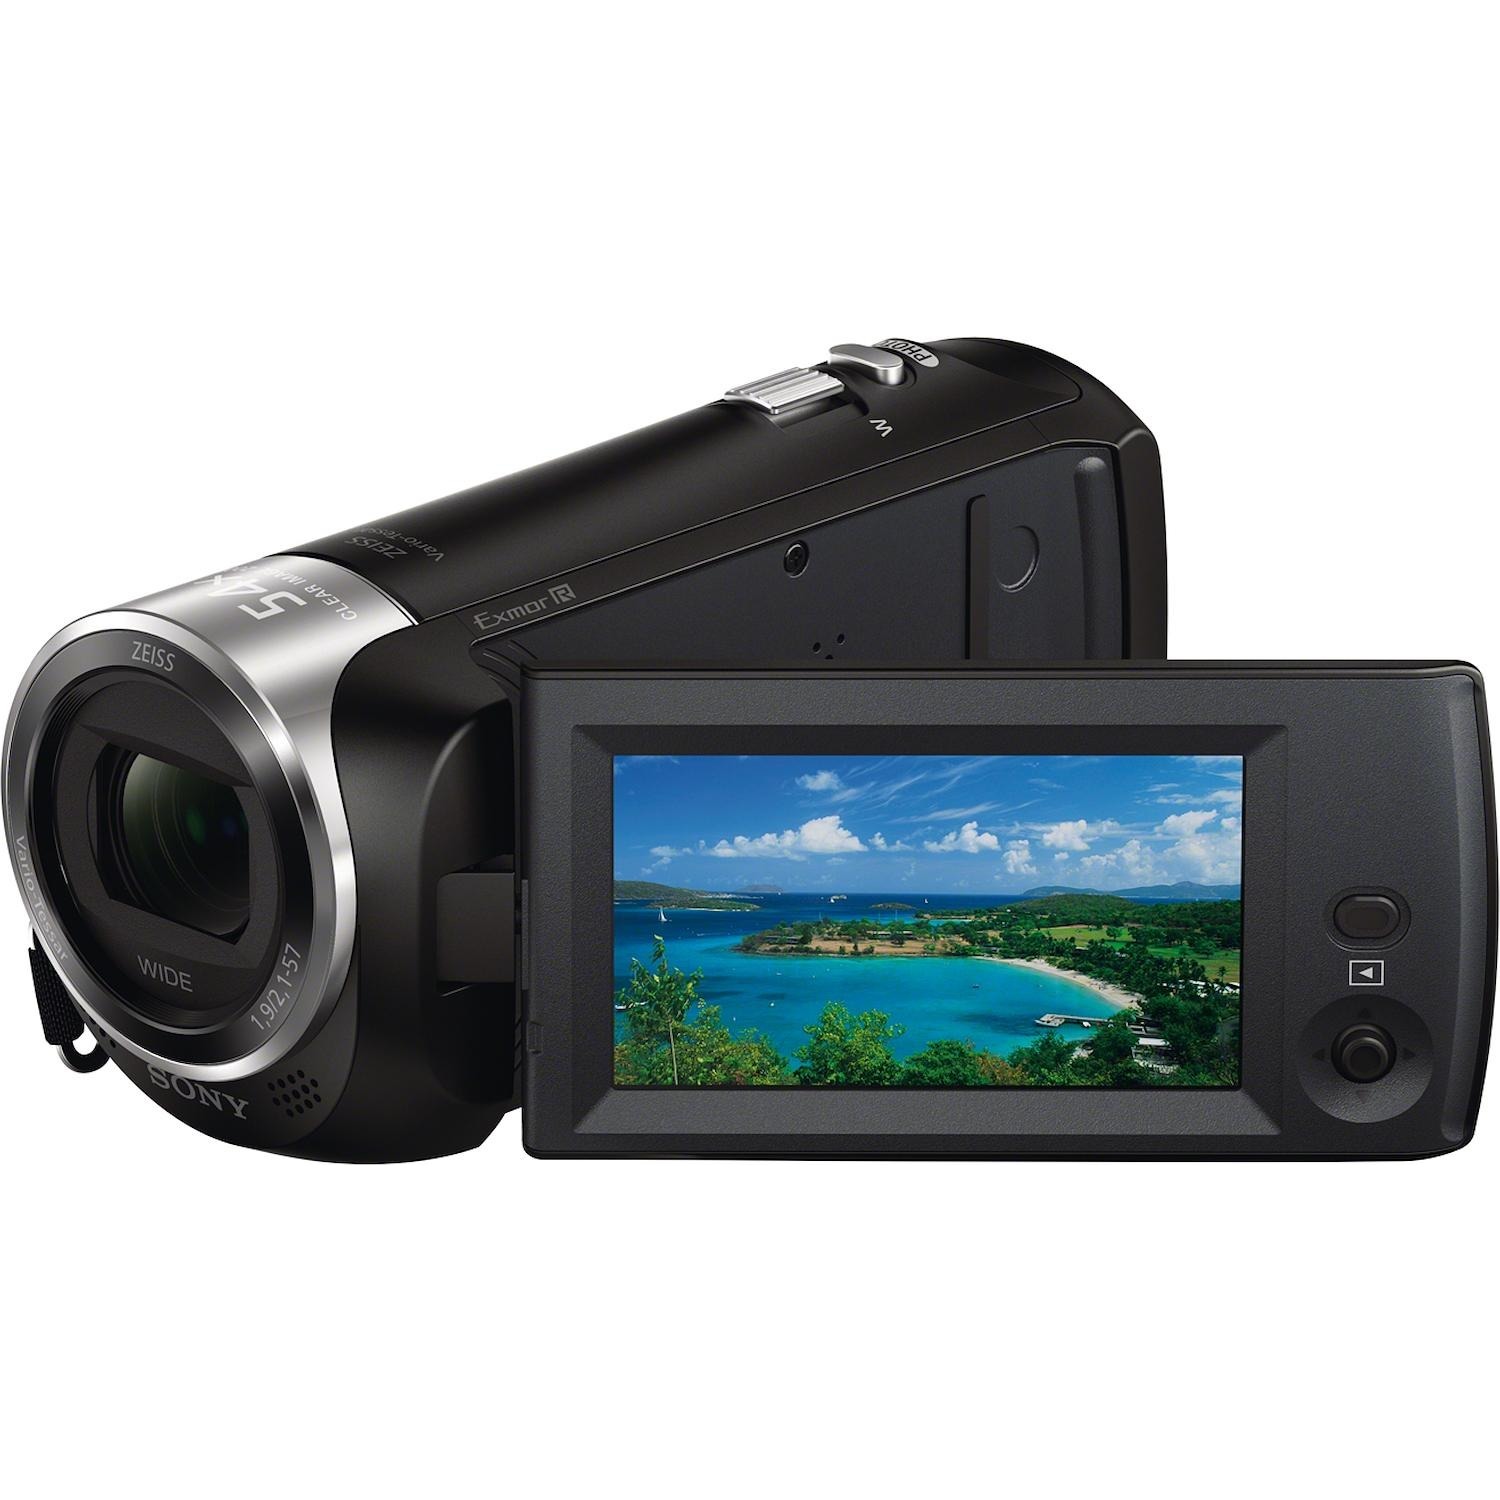 Immagine per Videocamera digitale Sony full HD HDRCX240 nero da DIMOStore